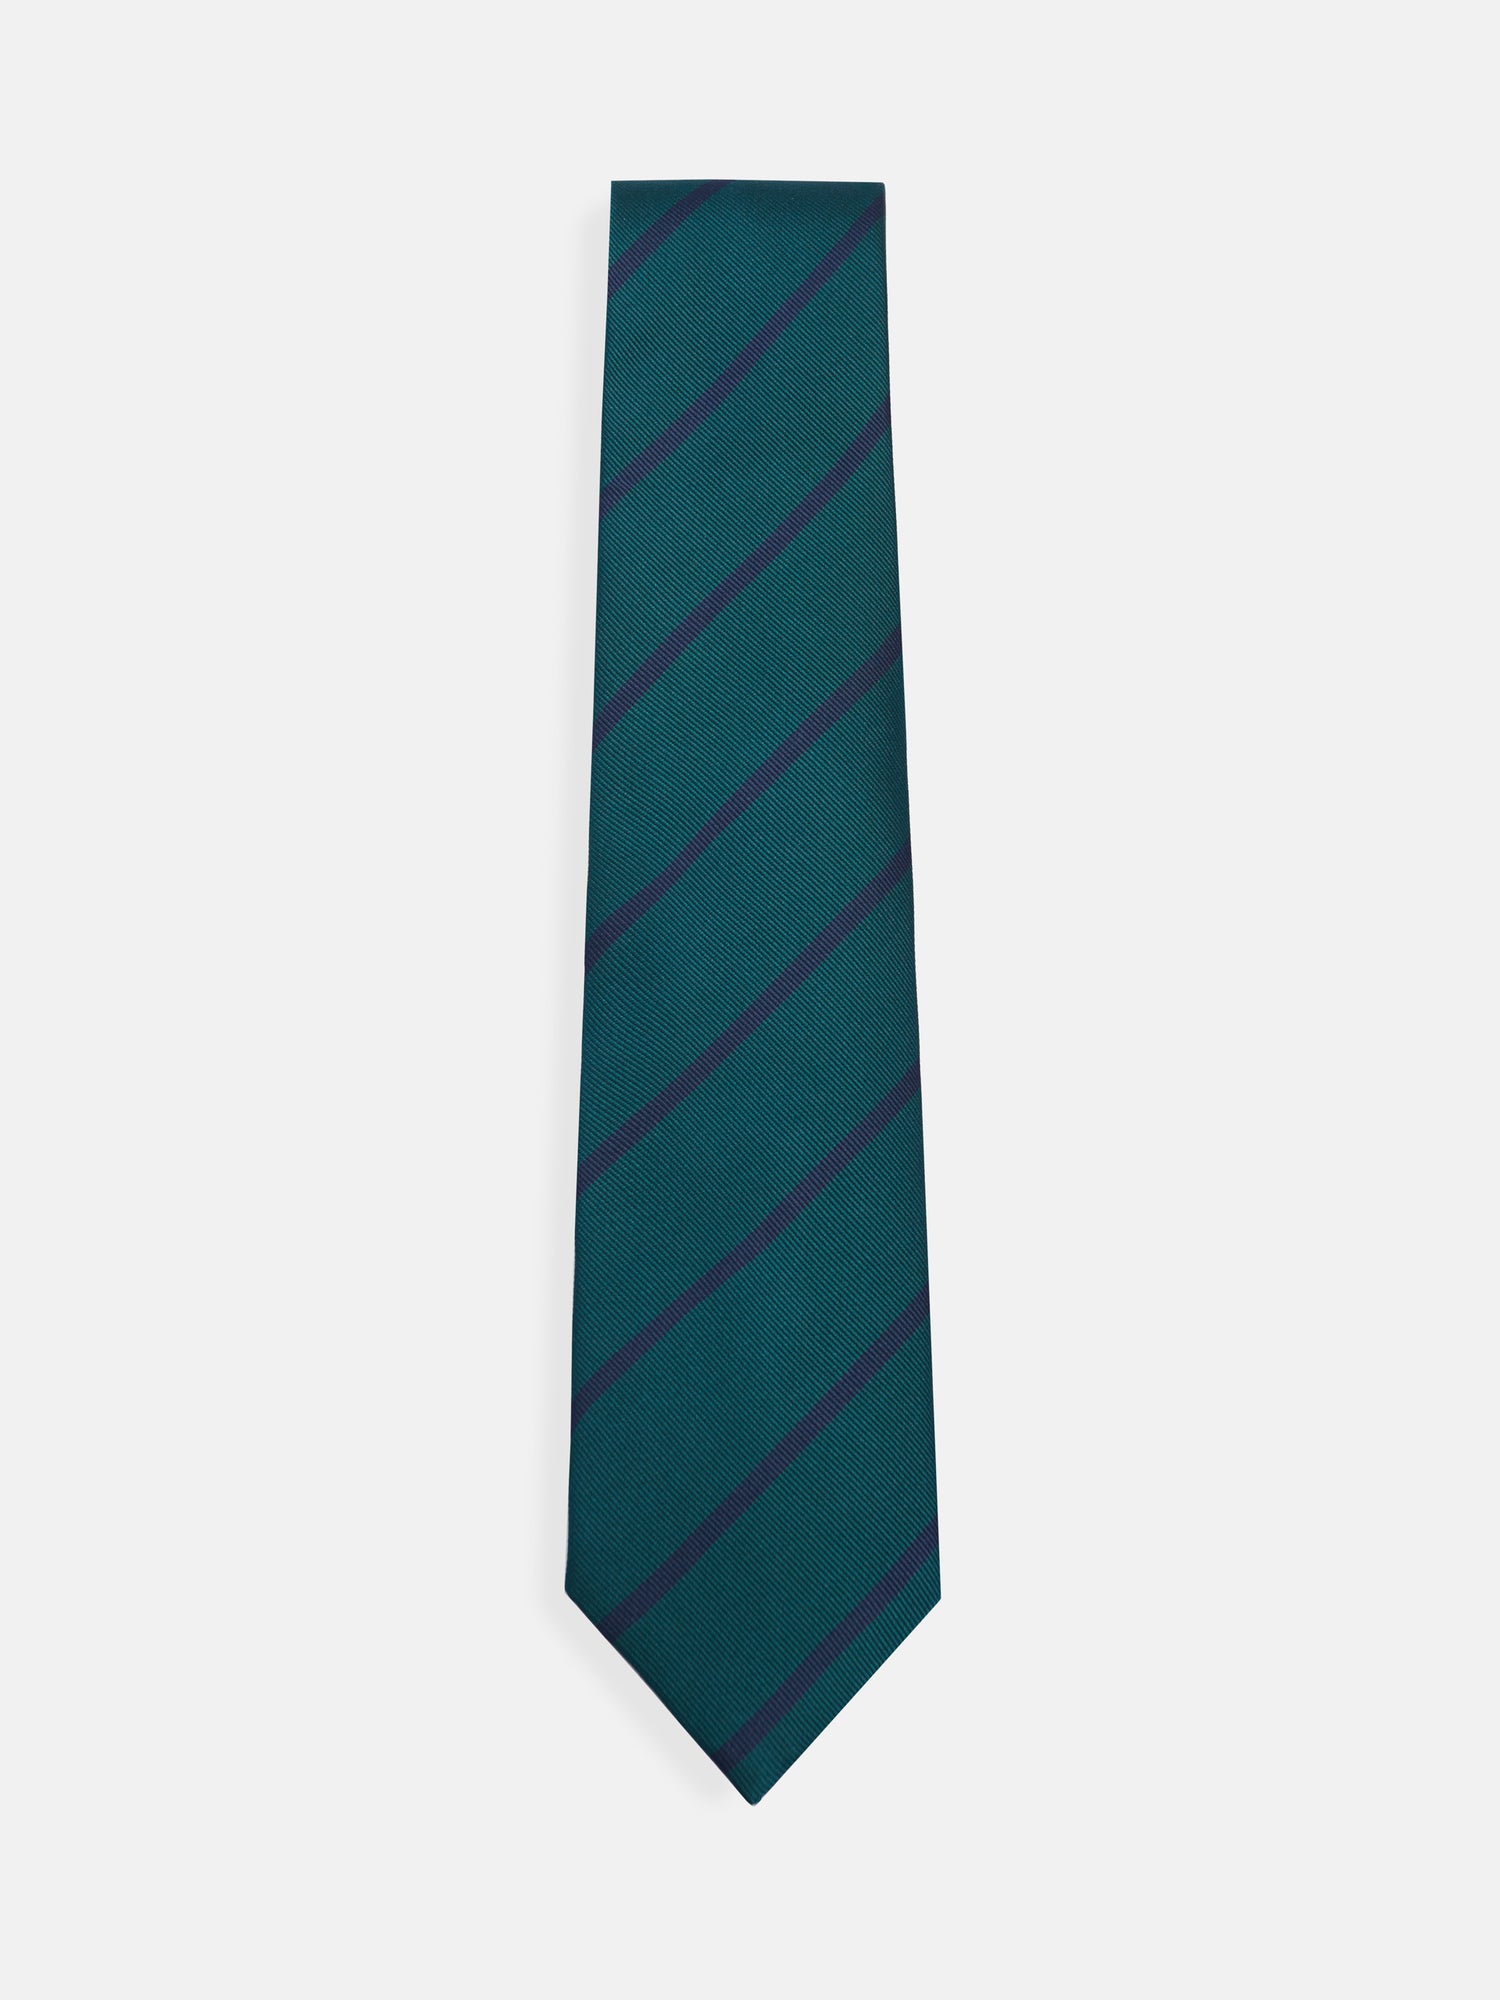 Corbata rayas verde